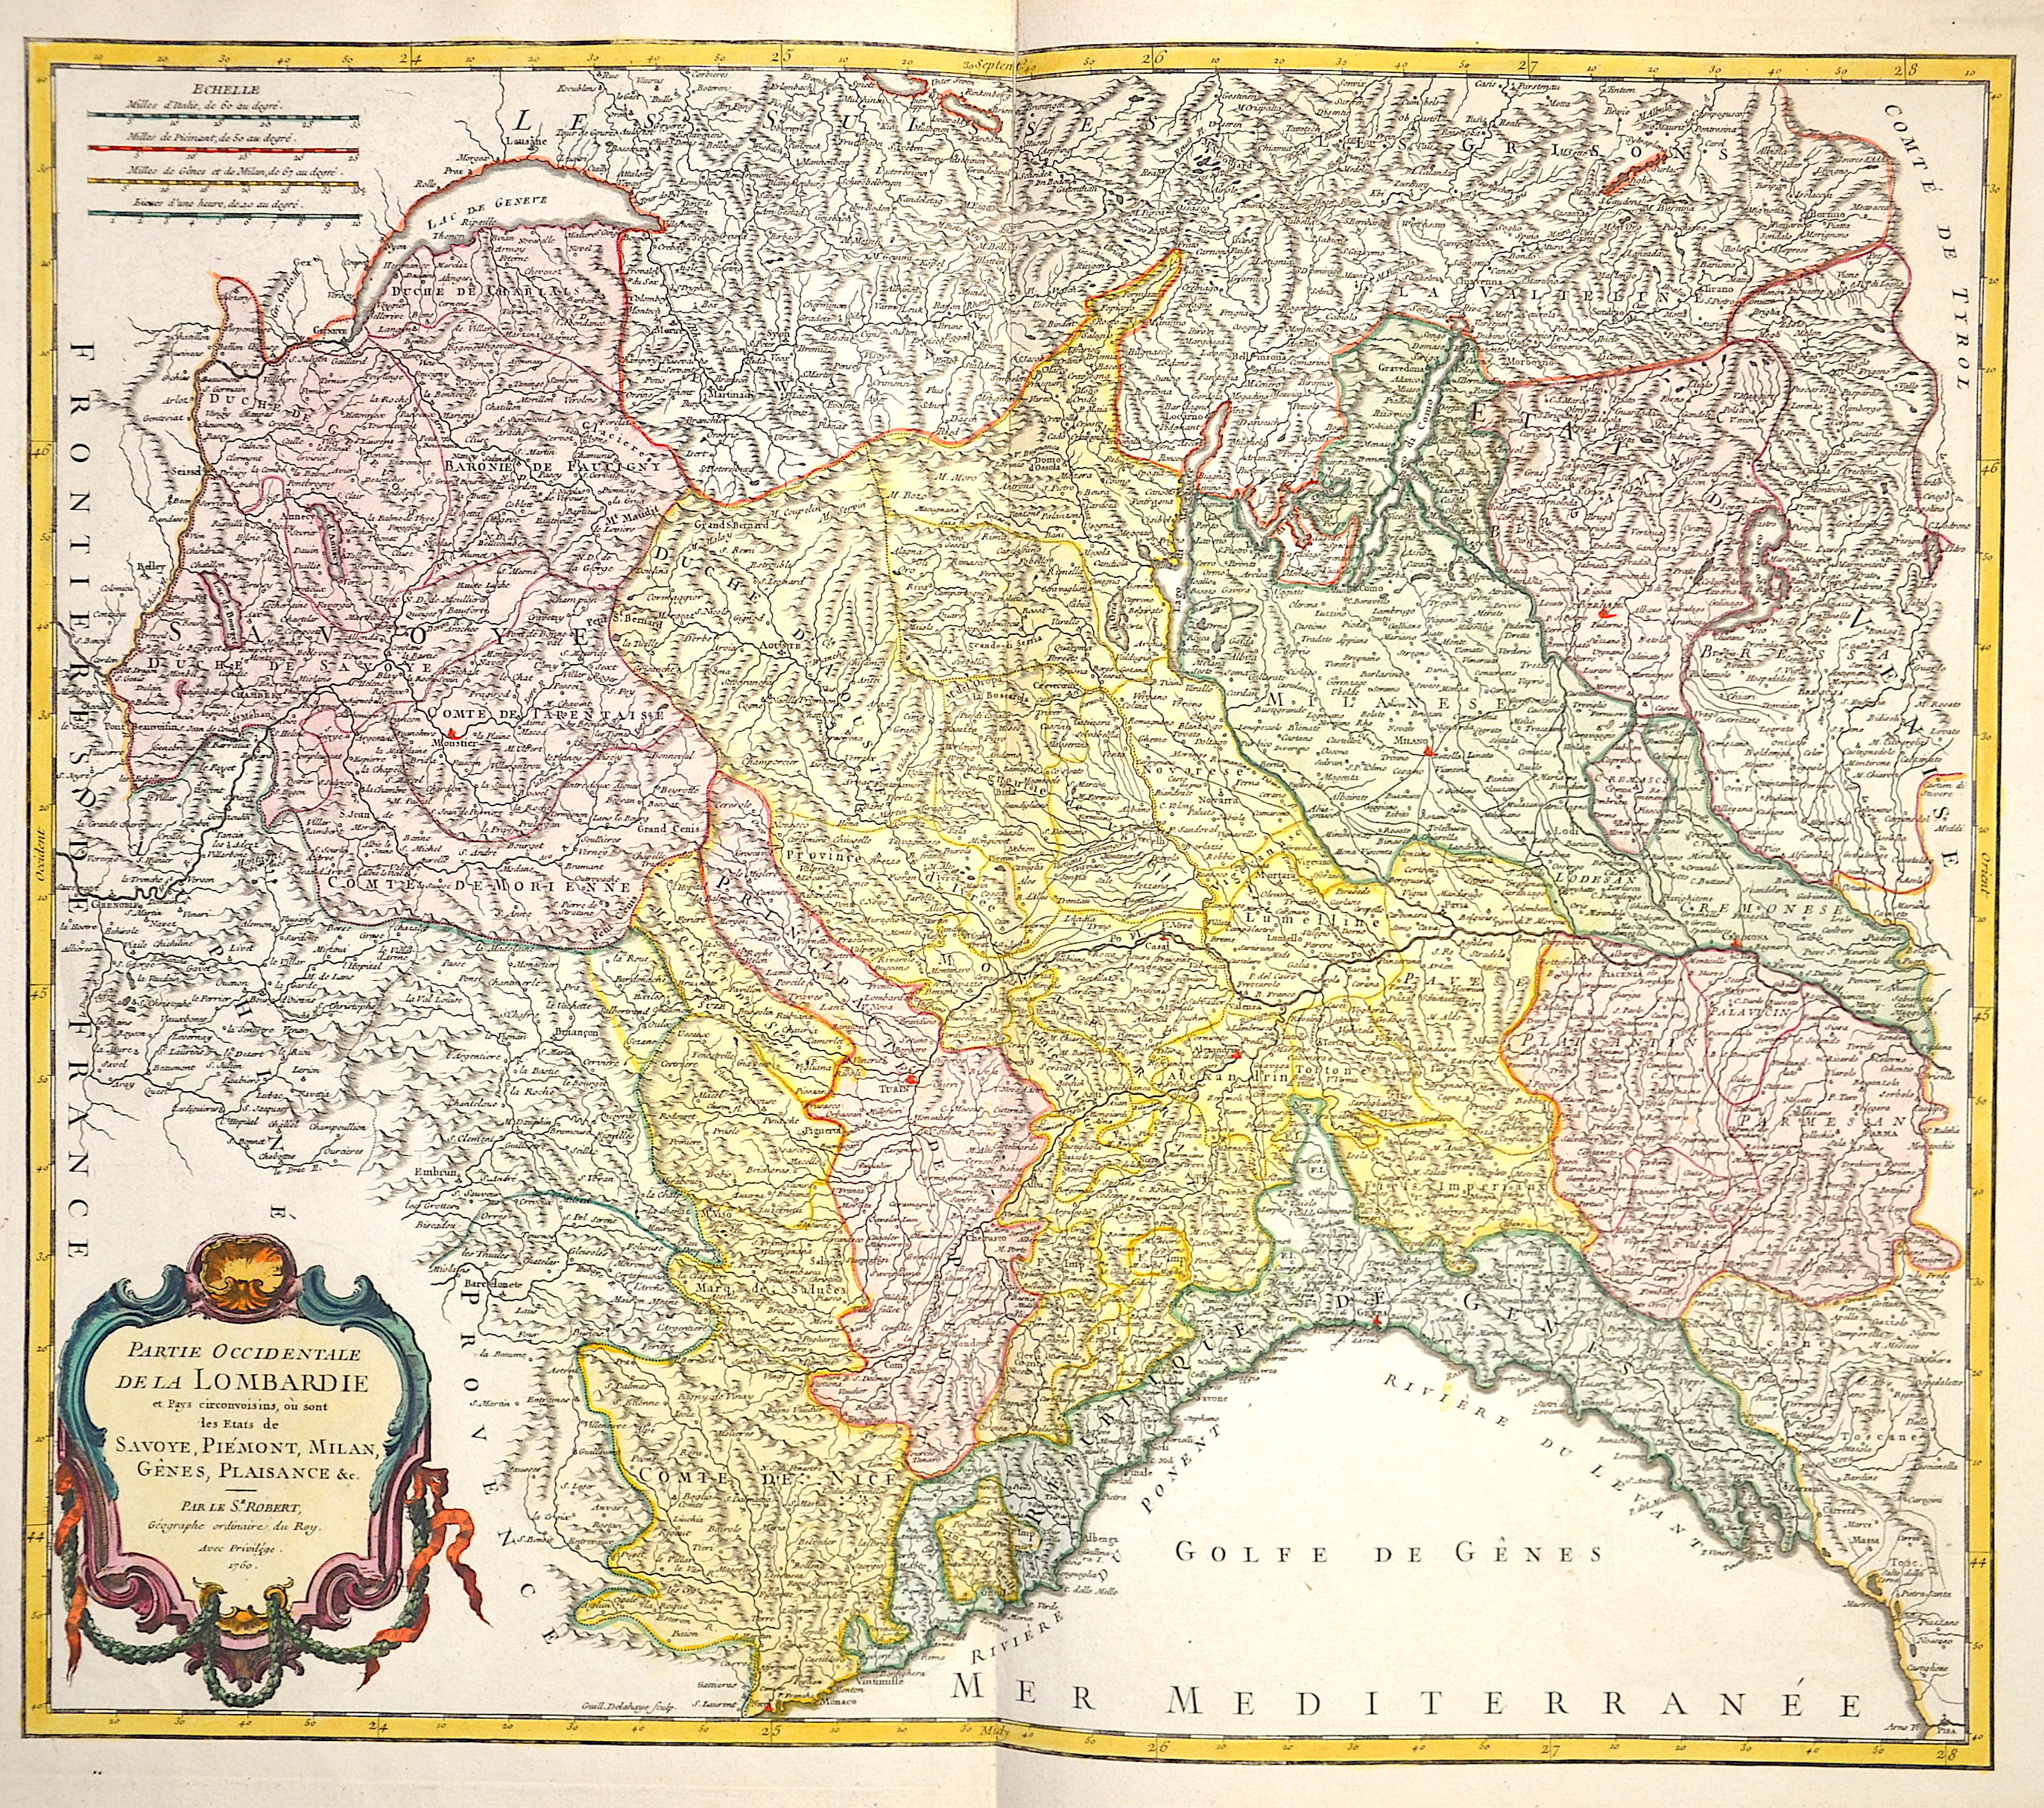 Vaugondy, de Didier/ Gilles Robert Partie occidentale de la Lombardie……Savoye, Piemont, Milan, Genes, Plaisance,